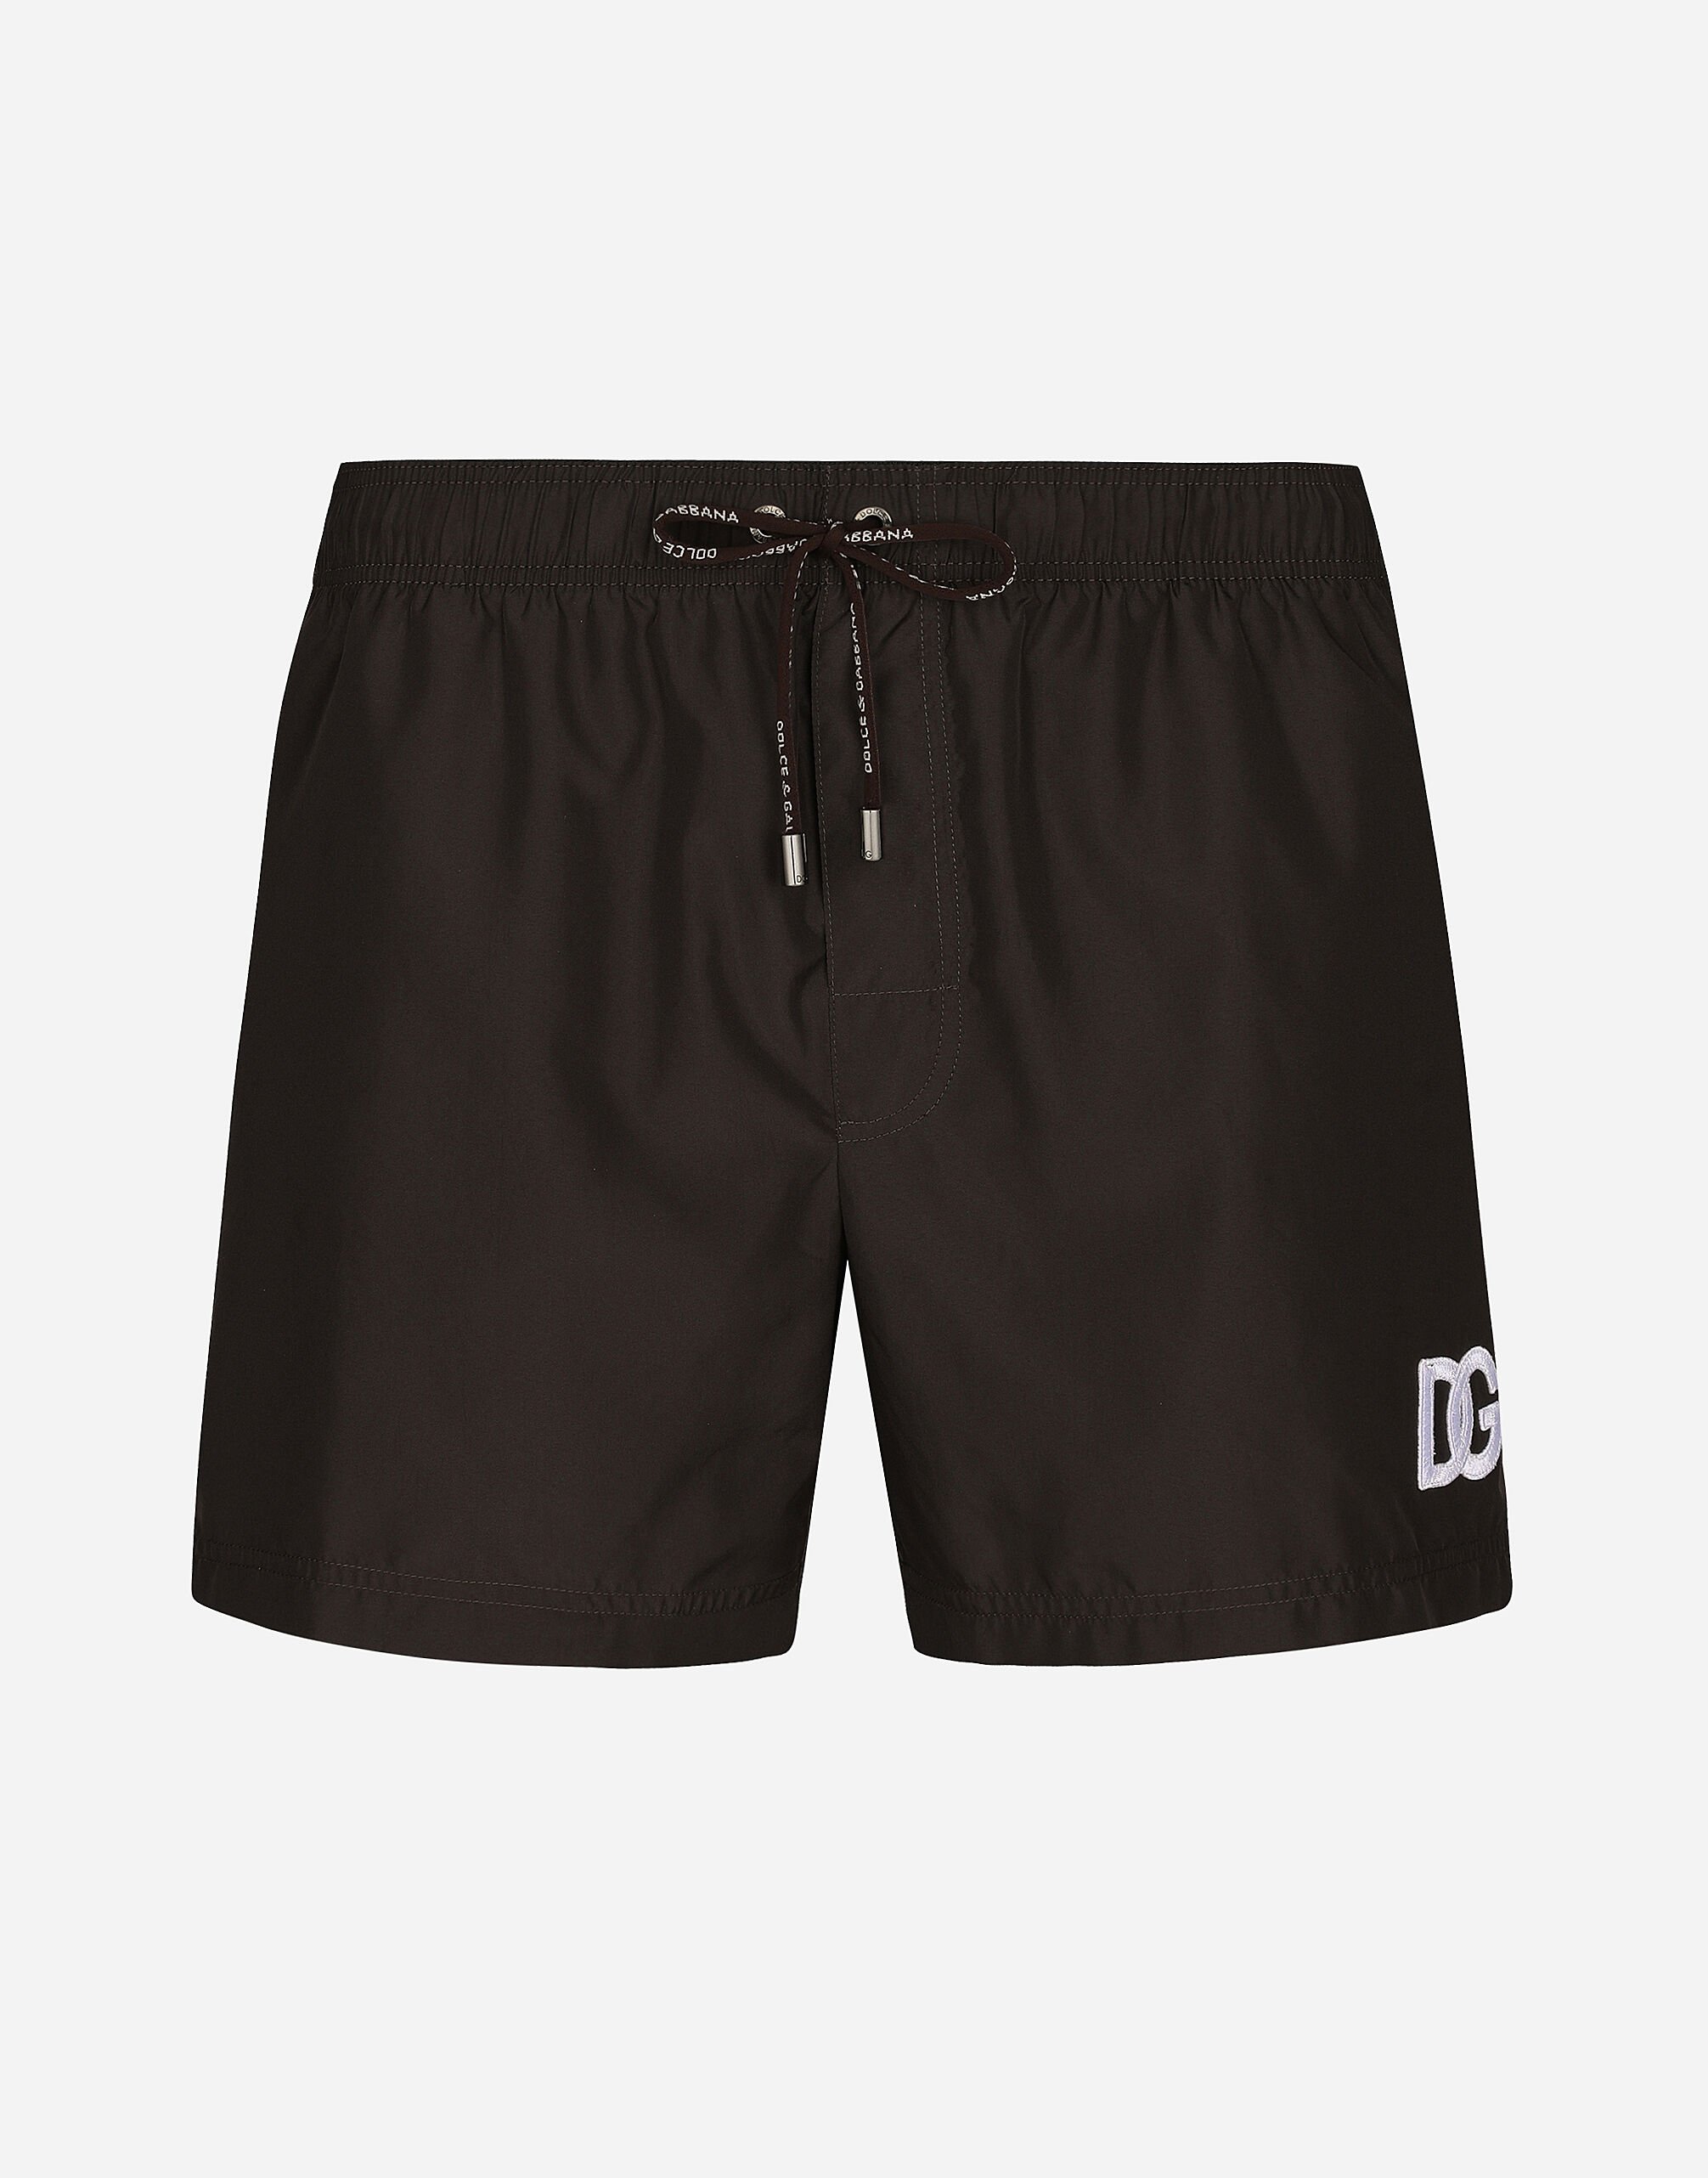 Dolce & Gabbana Short swim trunks with DG logo patch Print M4A13TISMF5